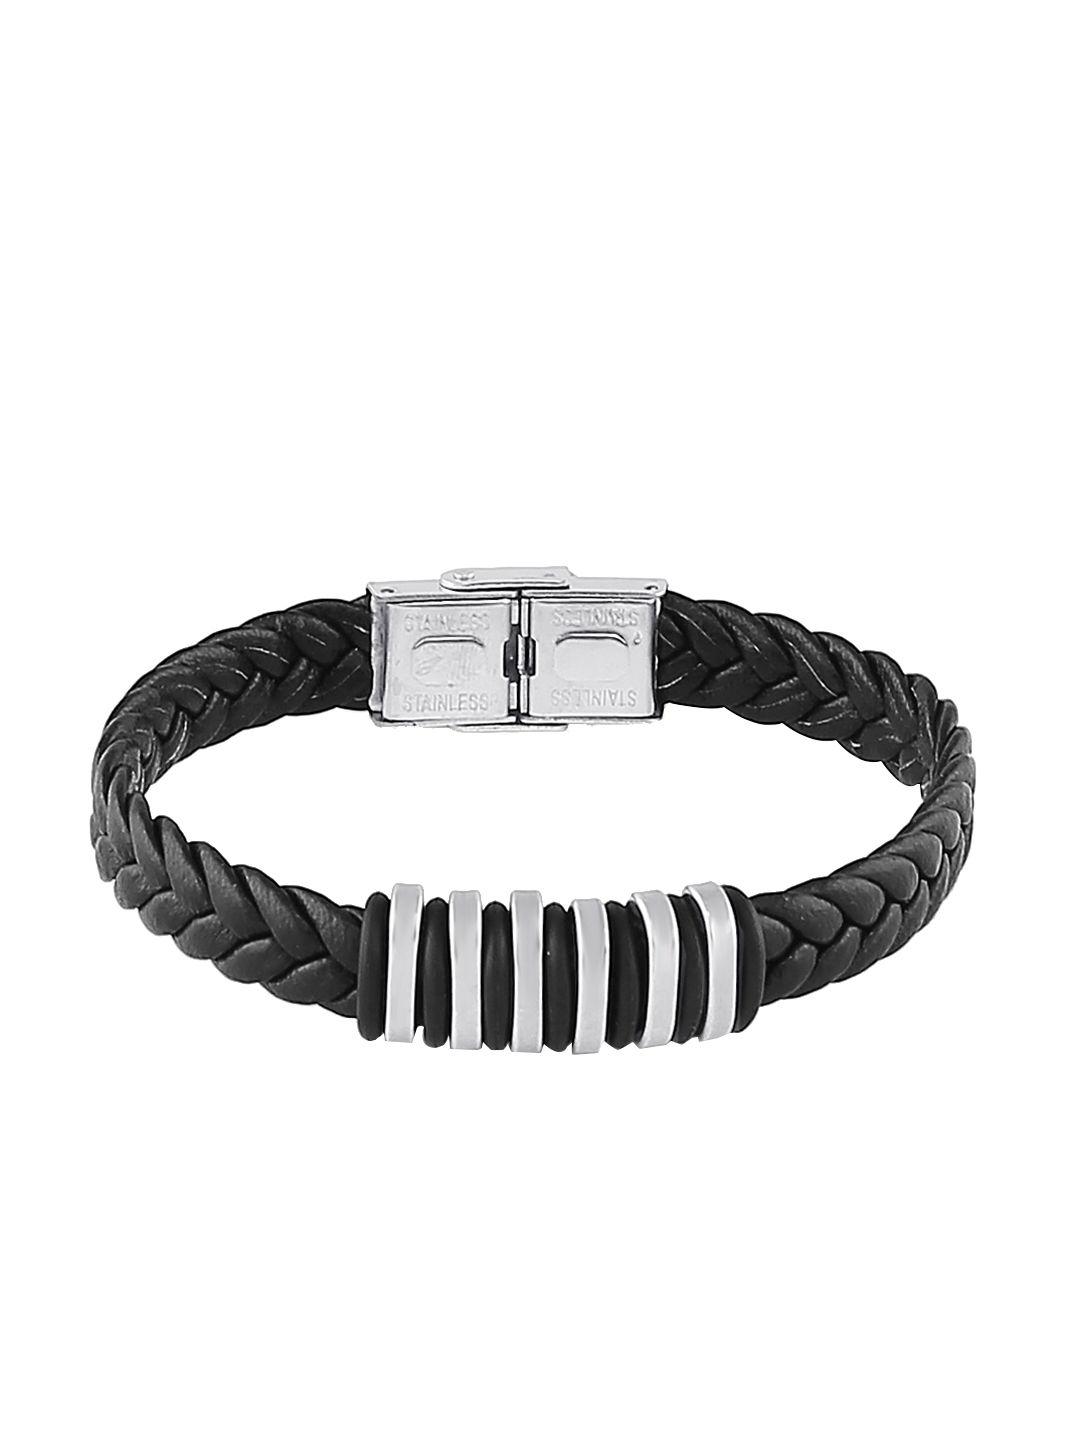 bodha men black leather cuff bracelet